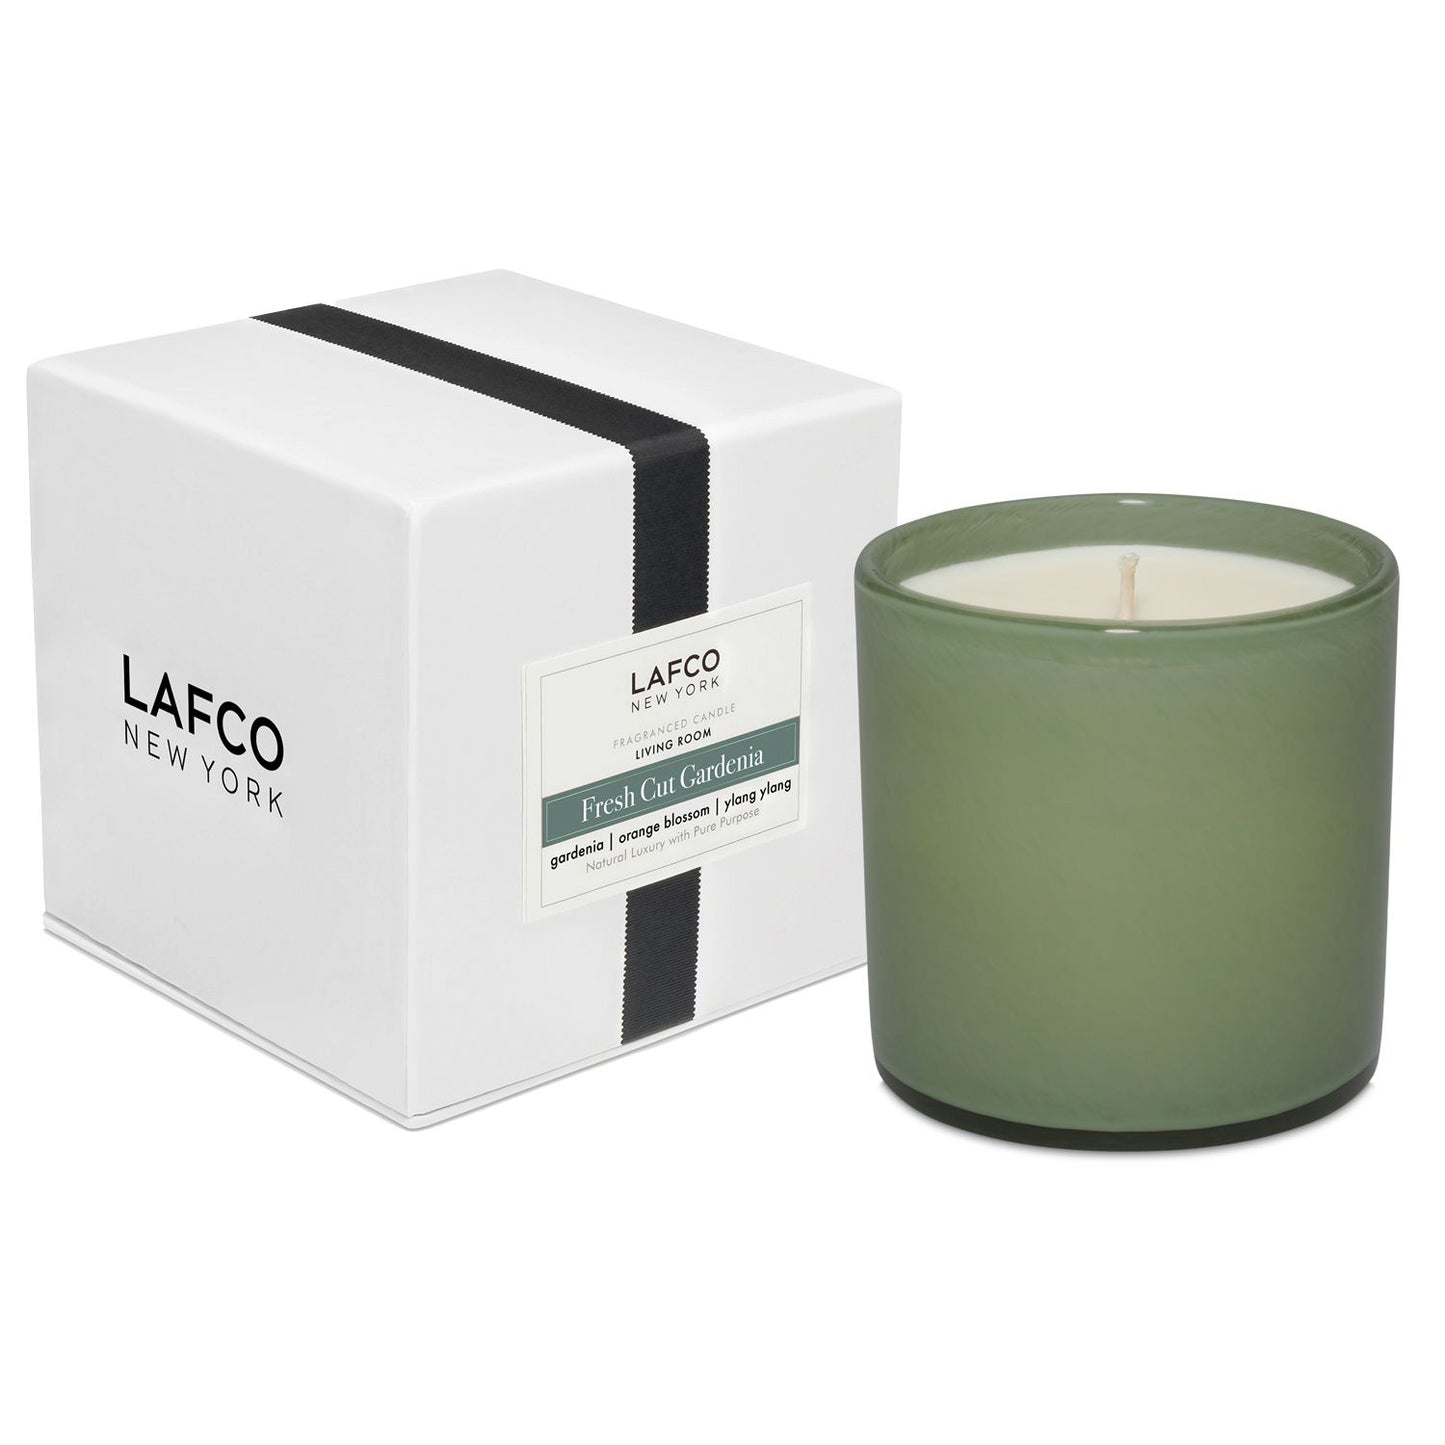 Lafco 15.5oz Candle